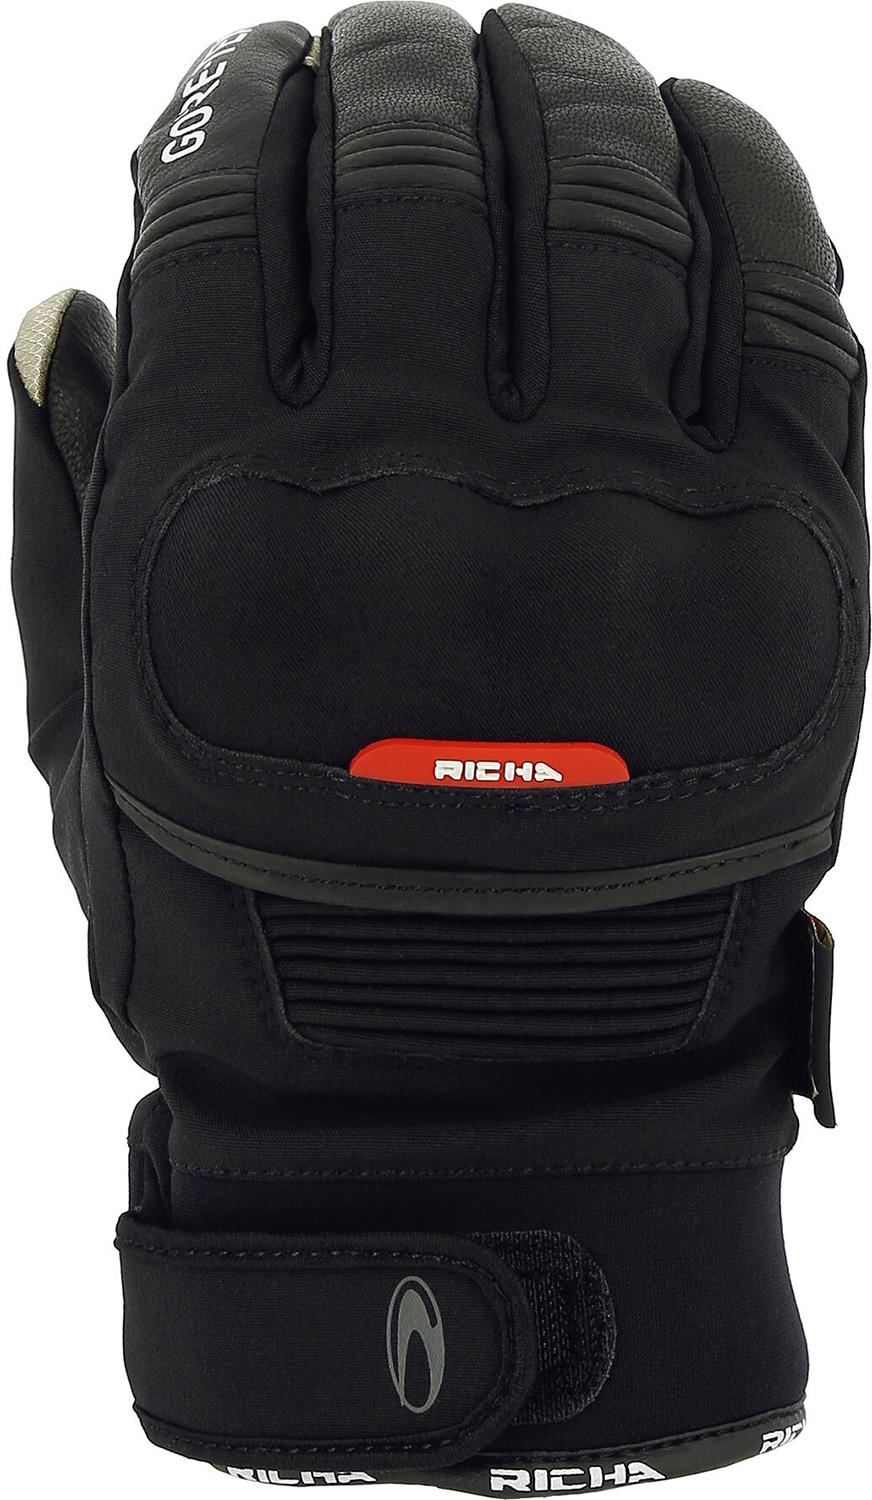 Richa City Gtx Glove Blk 2Xl